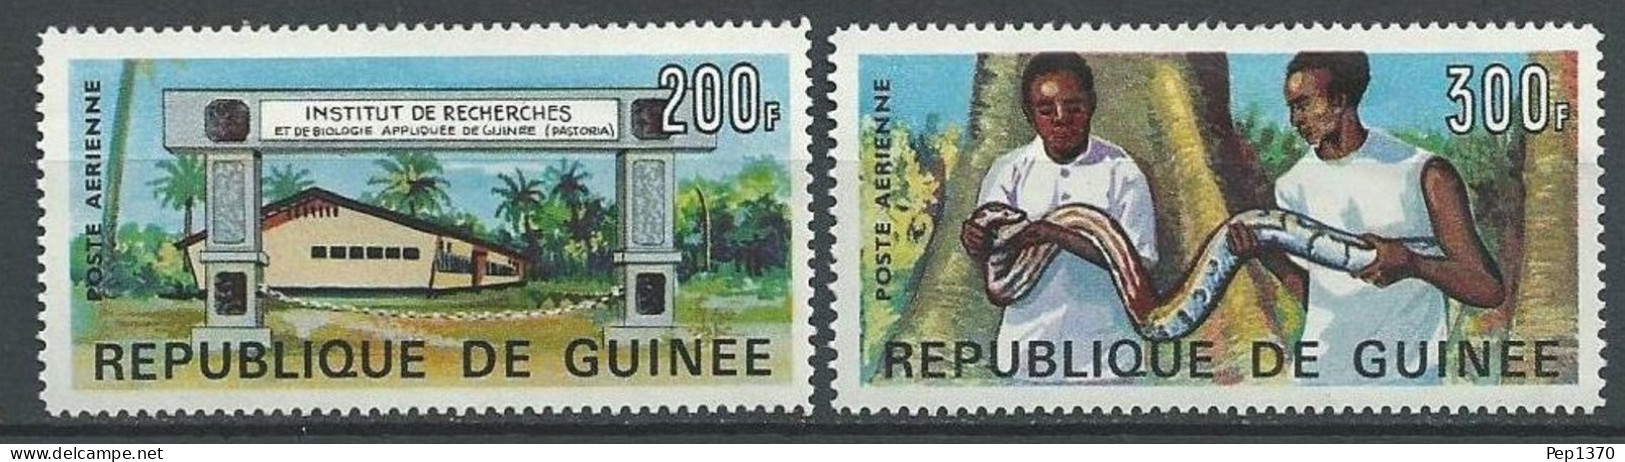 GUINEA 1967 - GUINEE - INSTITUTO DE INVESTIGACIONES Y BIOLOGIA - YVERT AEREOS 69/70** - Serpientes